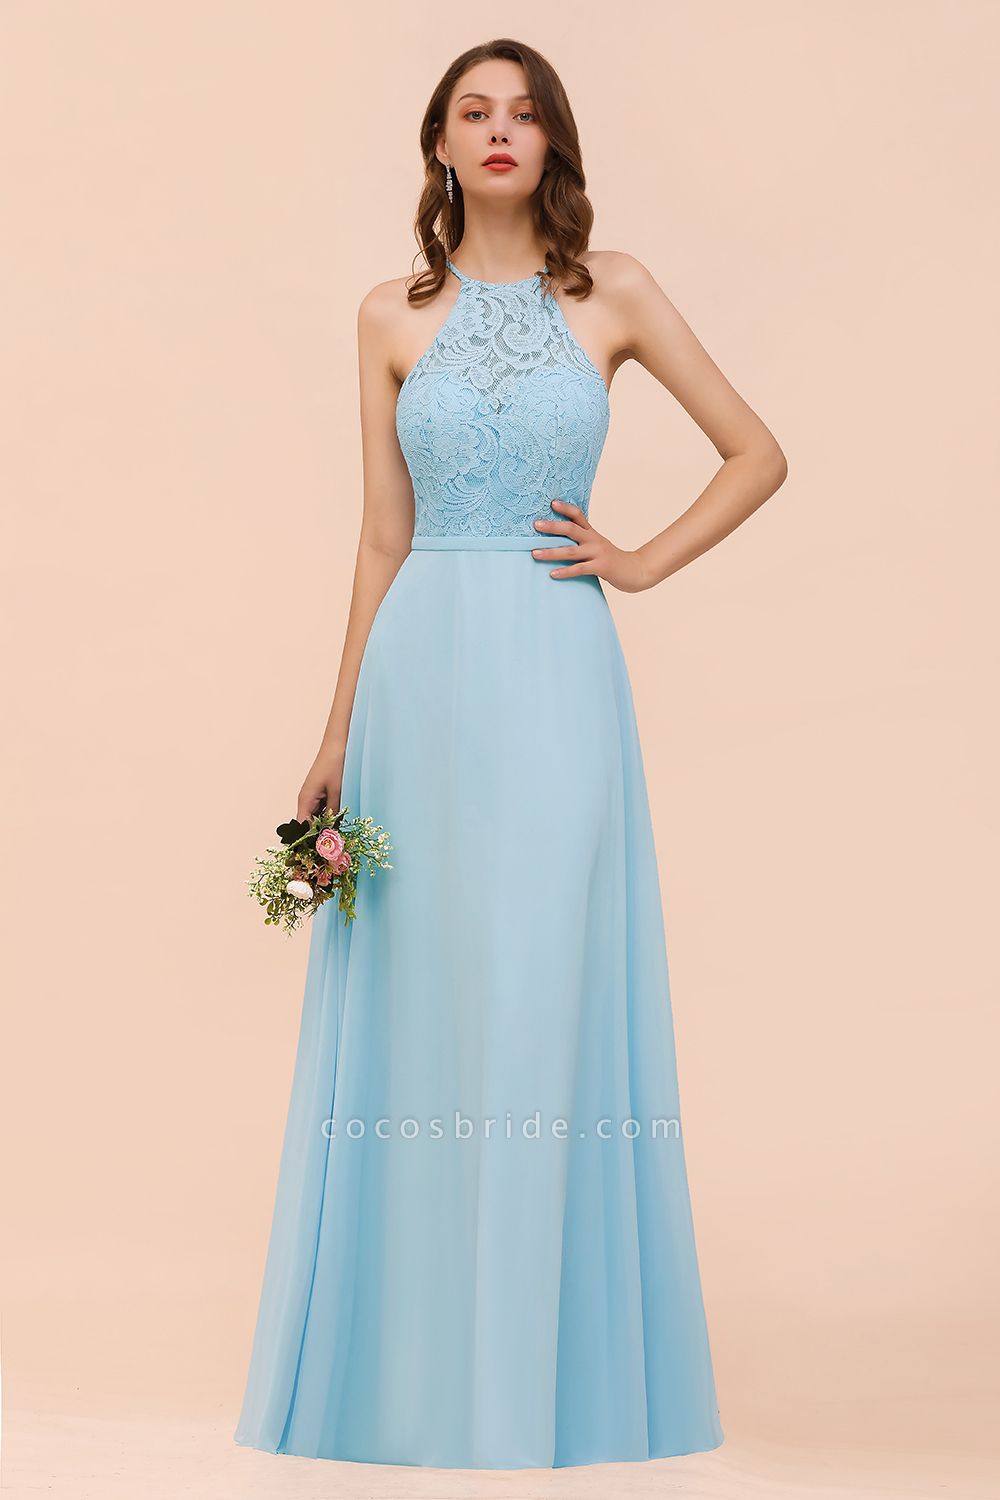 Sky Blue Halter Appliques Chiffon A-Line Bridesmaid Dress Sleeveless Party Dress